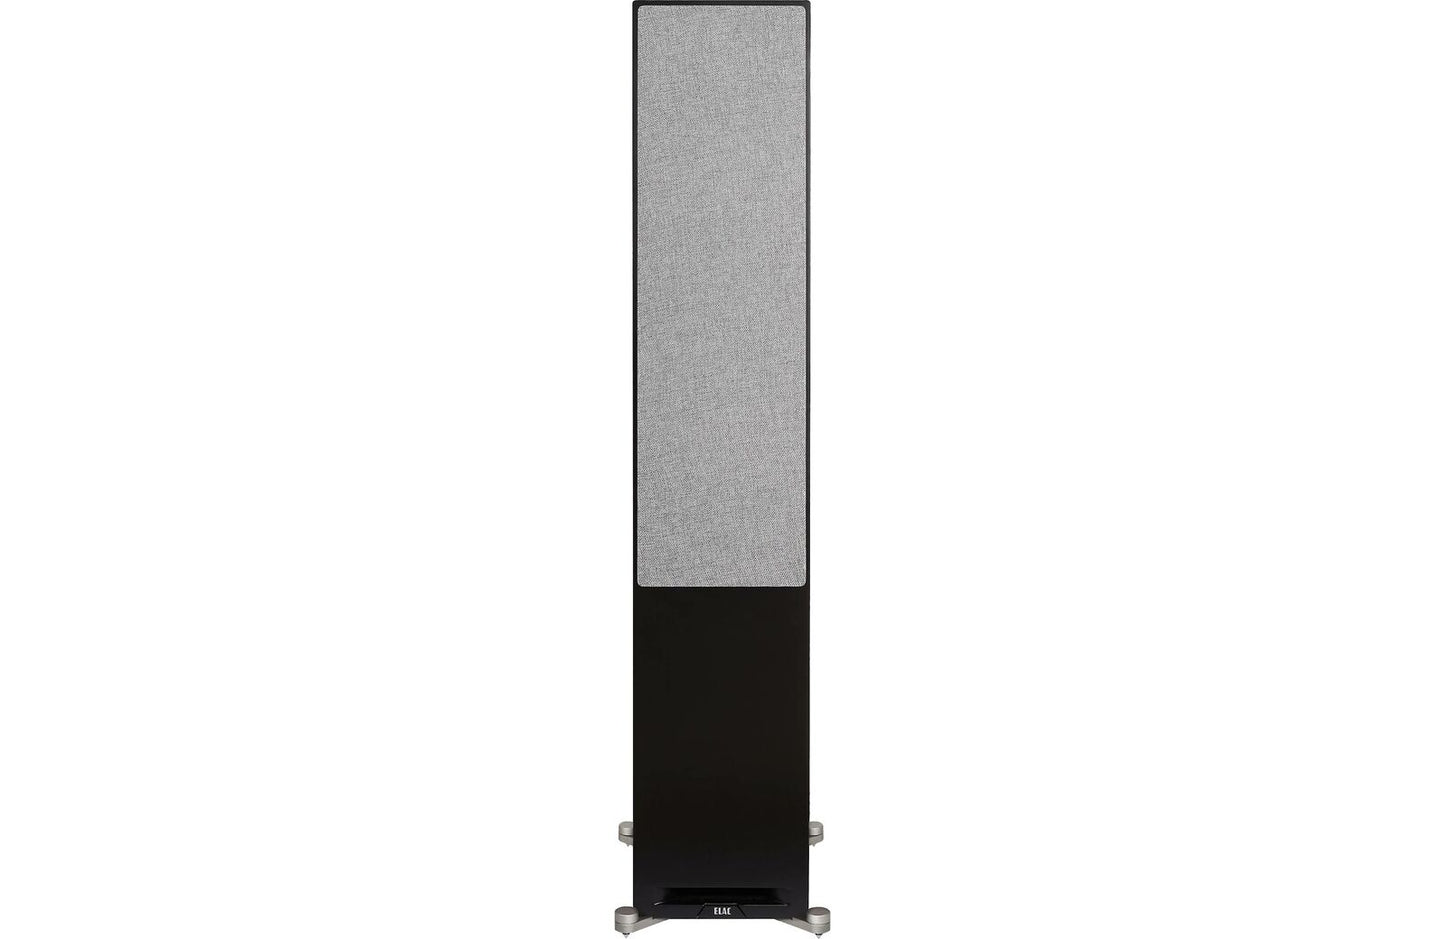 ELAC Debut Reference DFR52 Floor-Standing Speaker DFR52-BK (Walnut, Each)